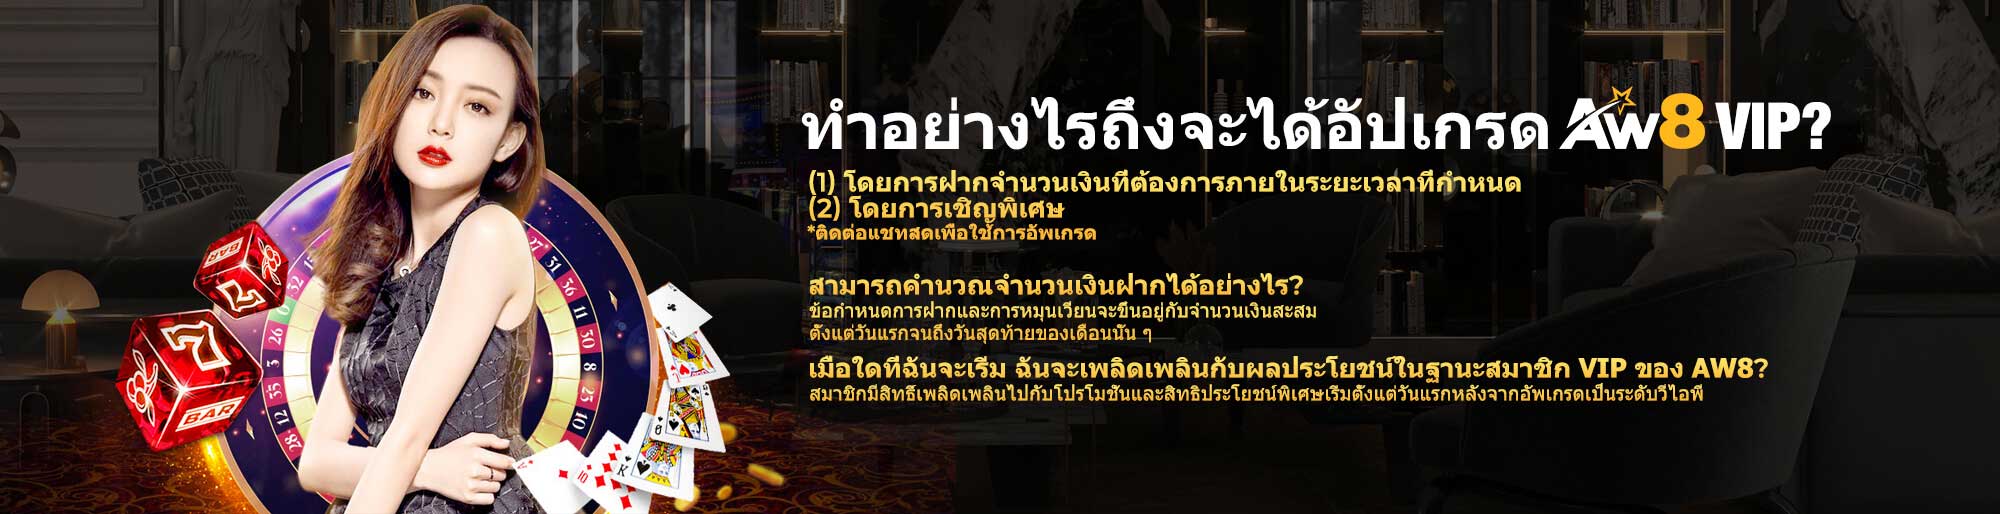 AW8 vip casino banner thai 3